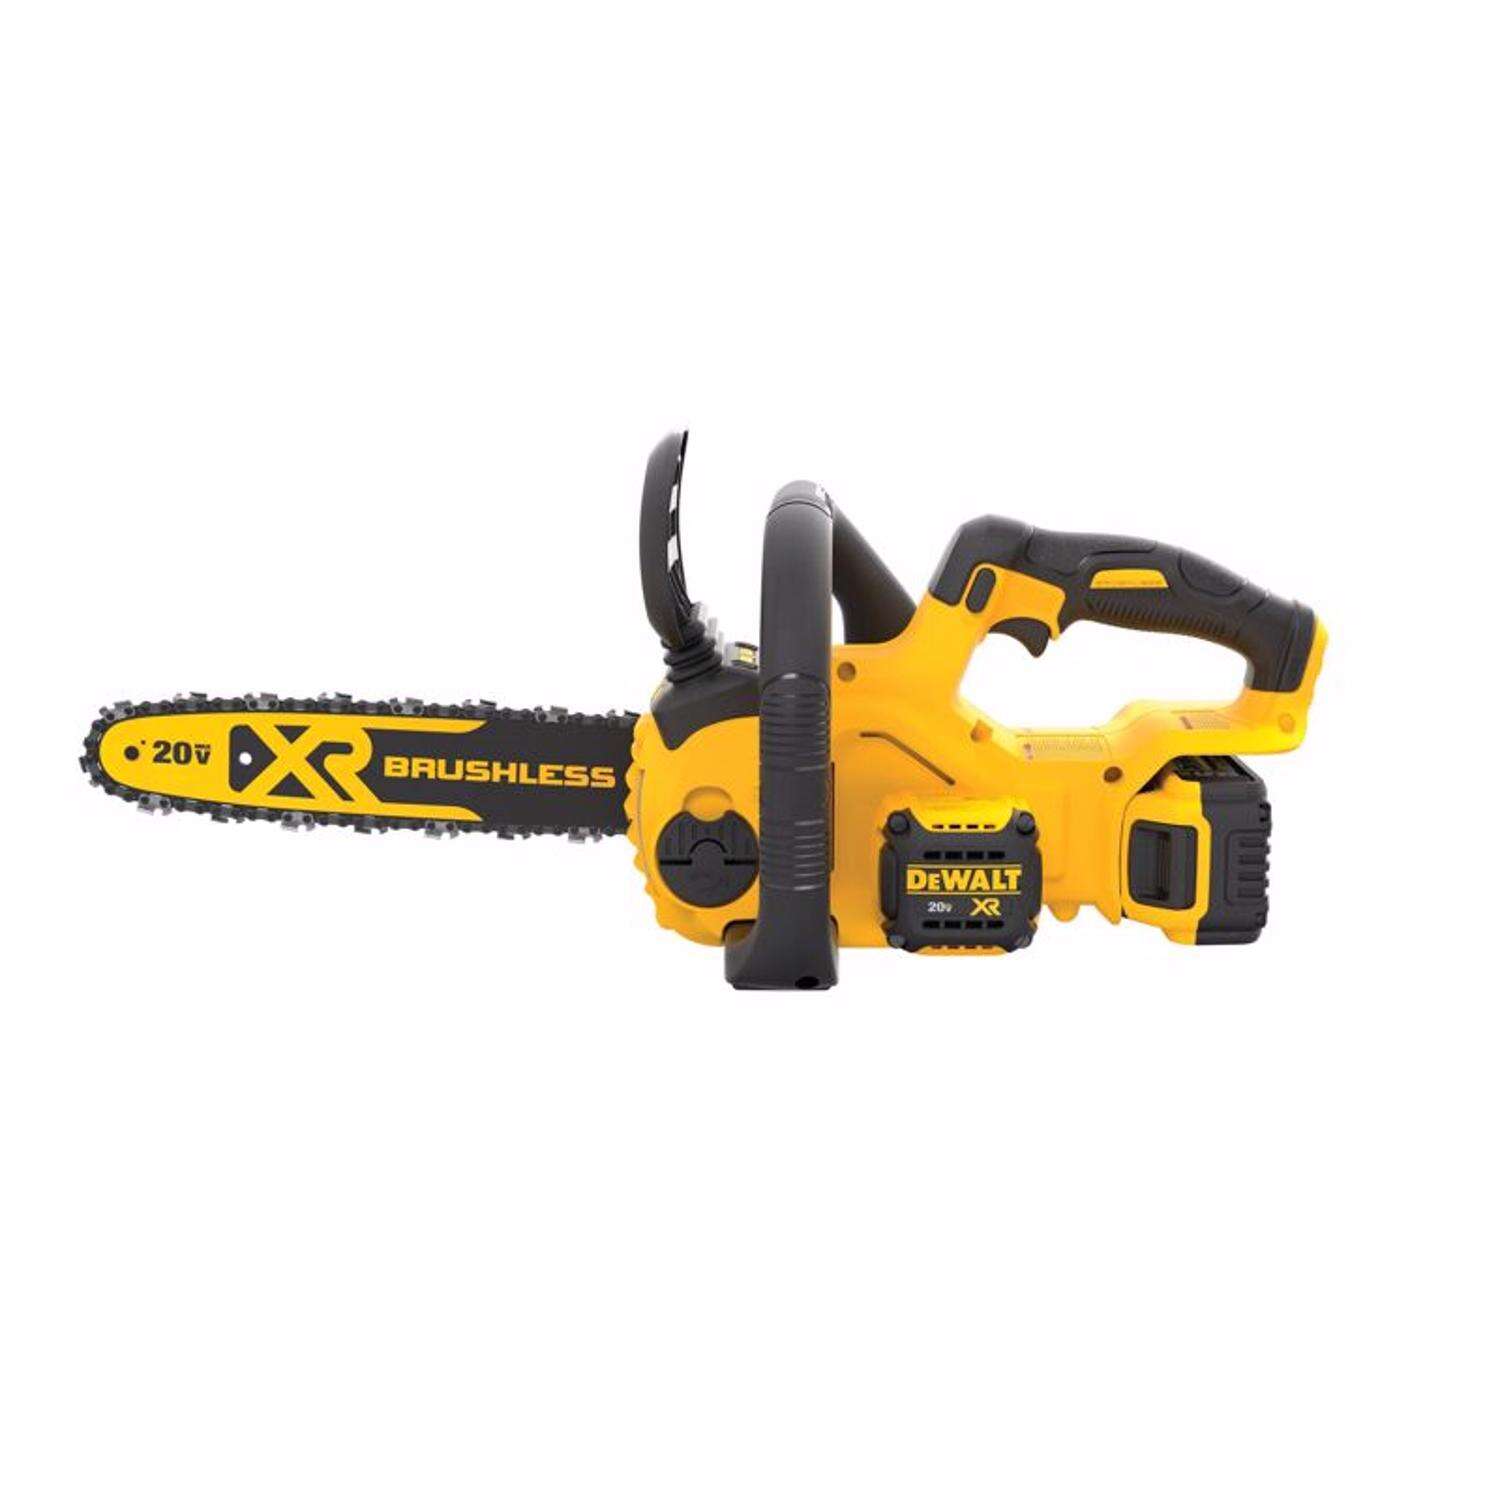 DEWALT 20V Max XR 12” Chainsaw, 5 Ah Battery, Charger + FREE 22” Hedge Trimmer - $229